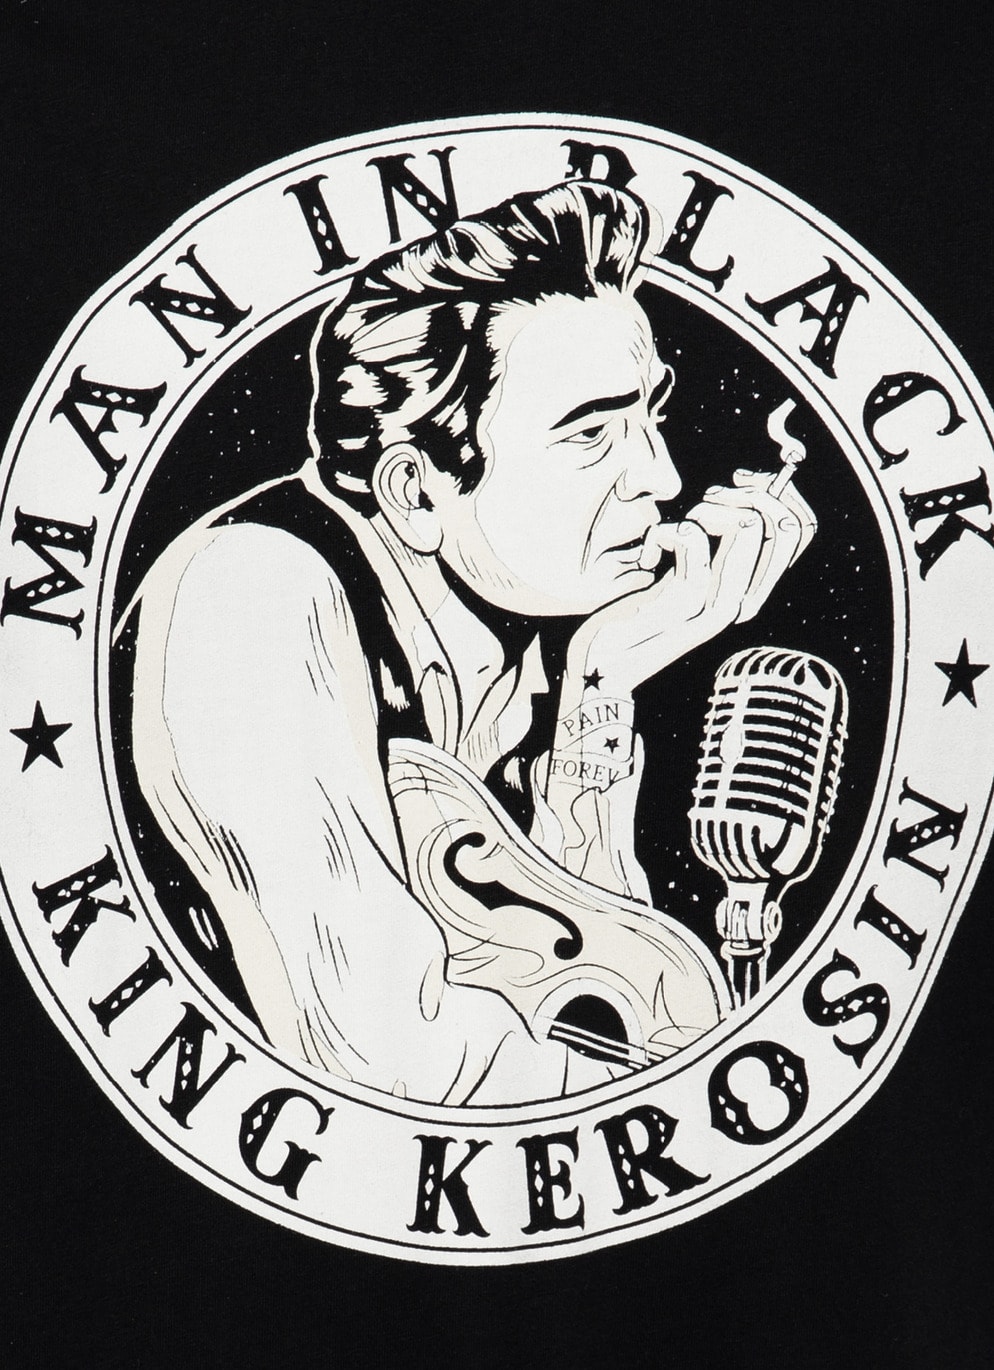 King Kerosin 50er Jahre Retro Rockabilly Herren T-Shirt Man in Black in Schwarz KKU31006-200